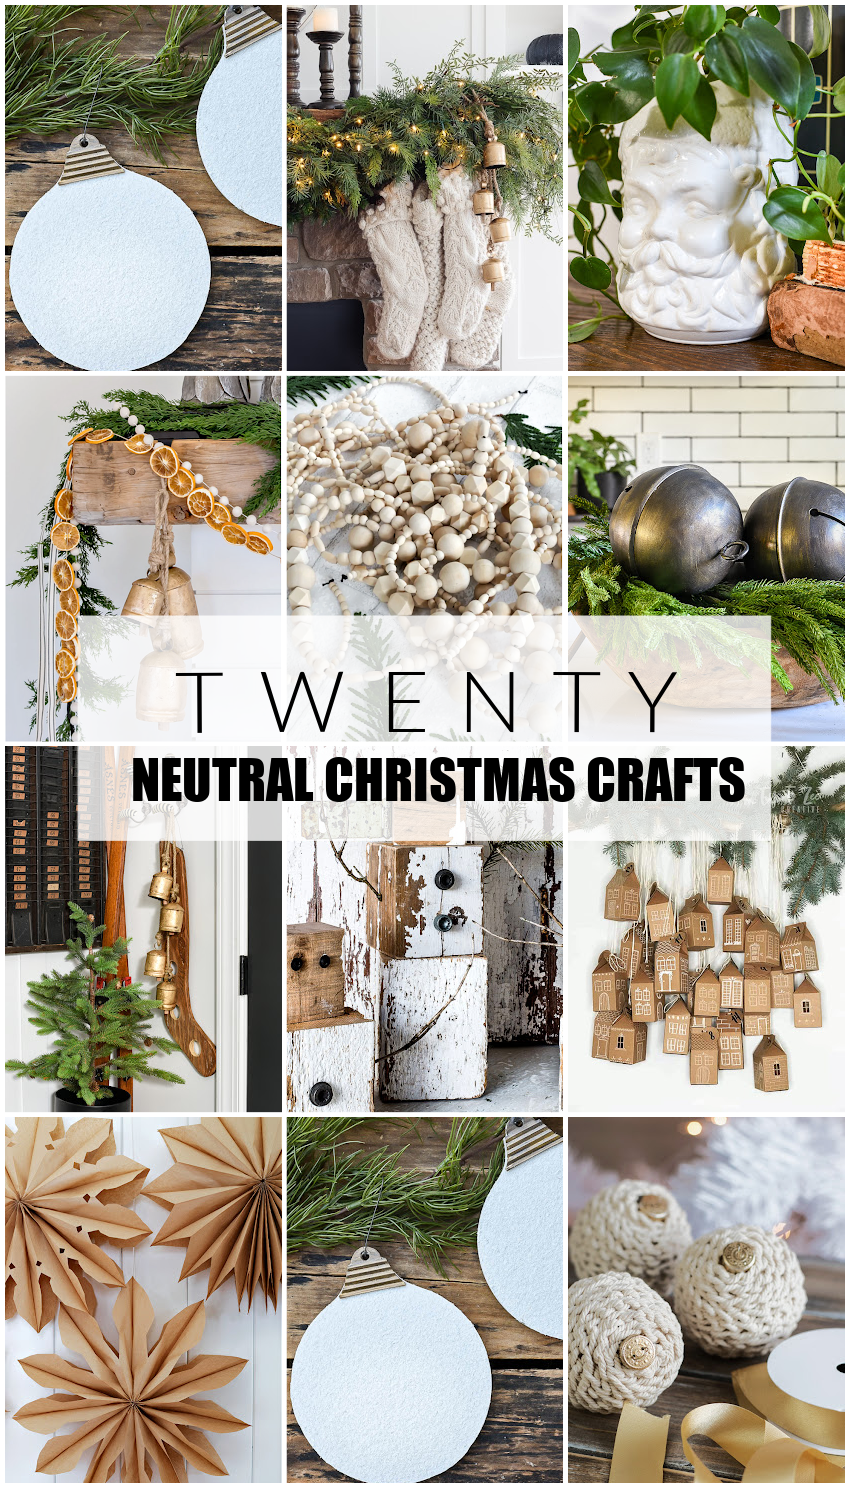 DIY neutral Christmas crafts